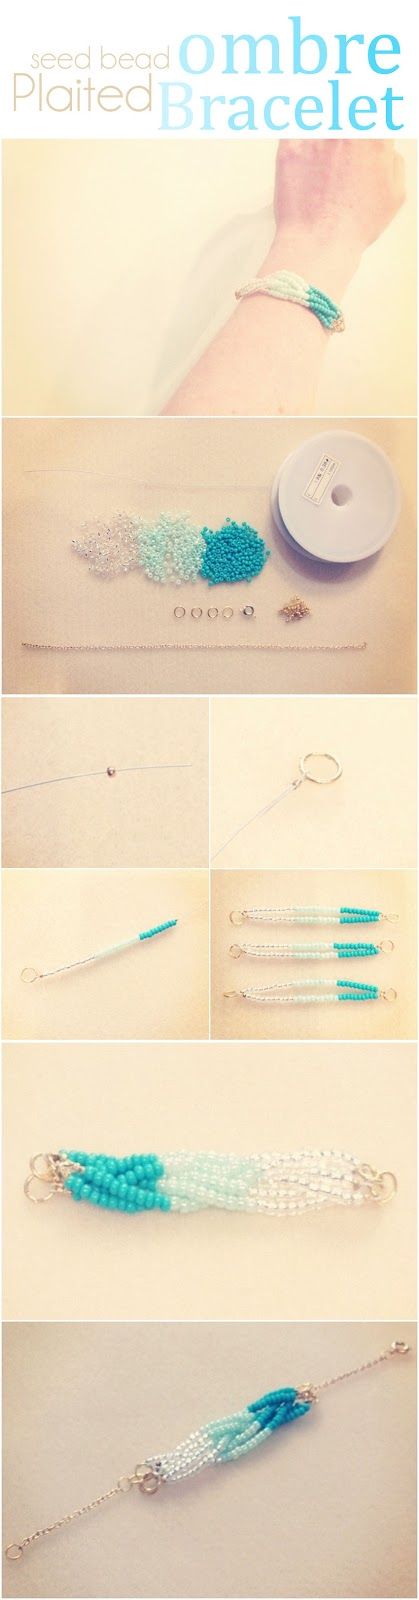 ombre seed bead bracelet